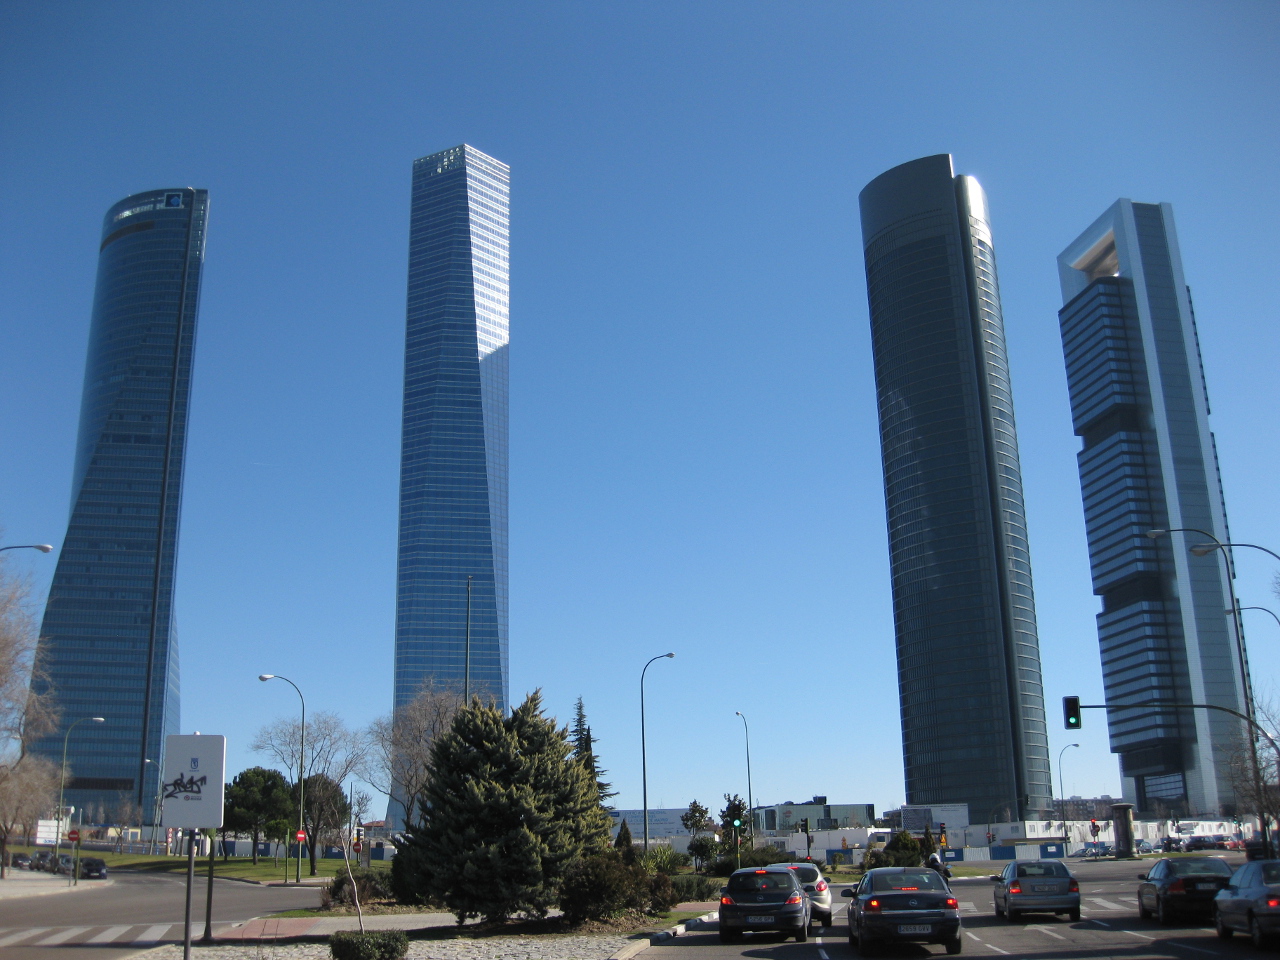 Madrid’s Cuatro Torres (Four Towers) Business Area